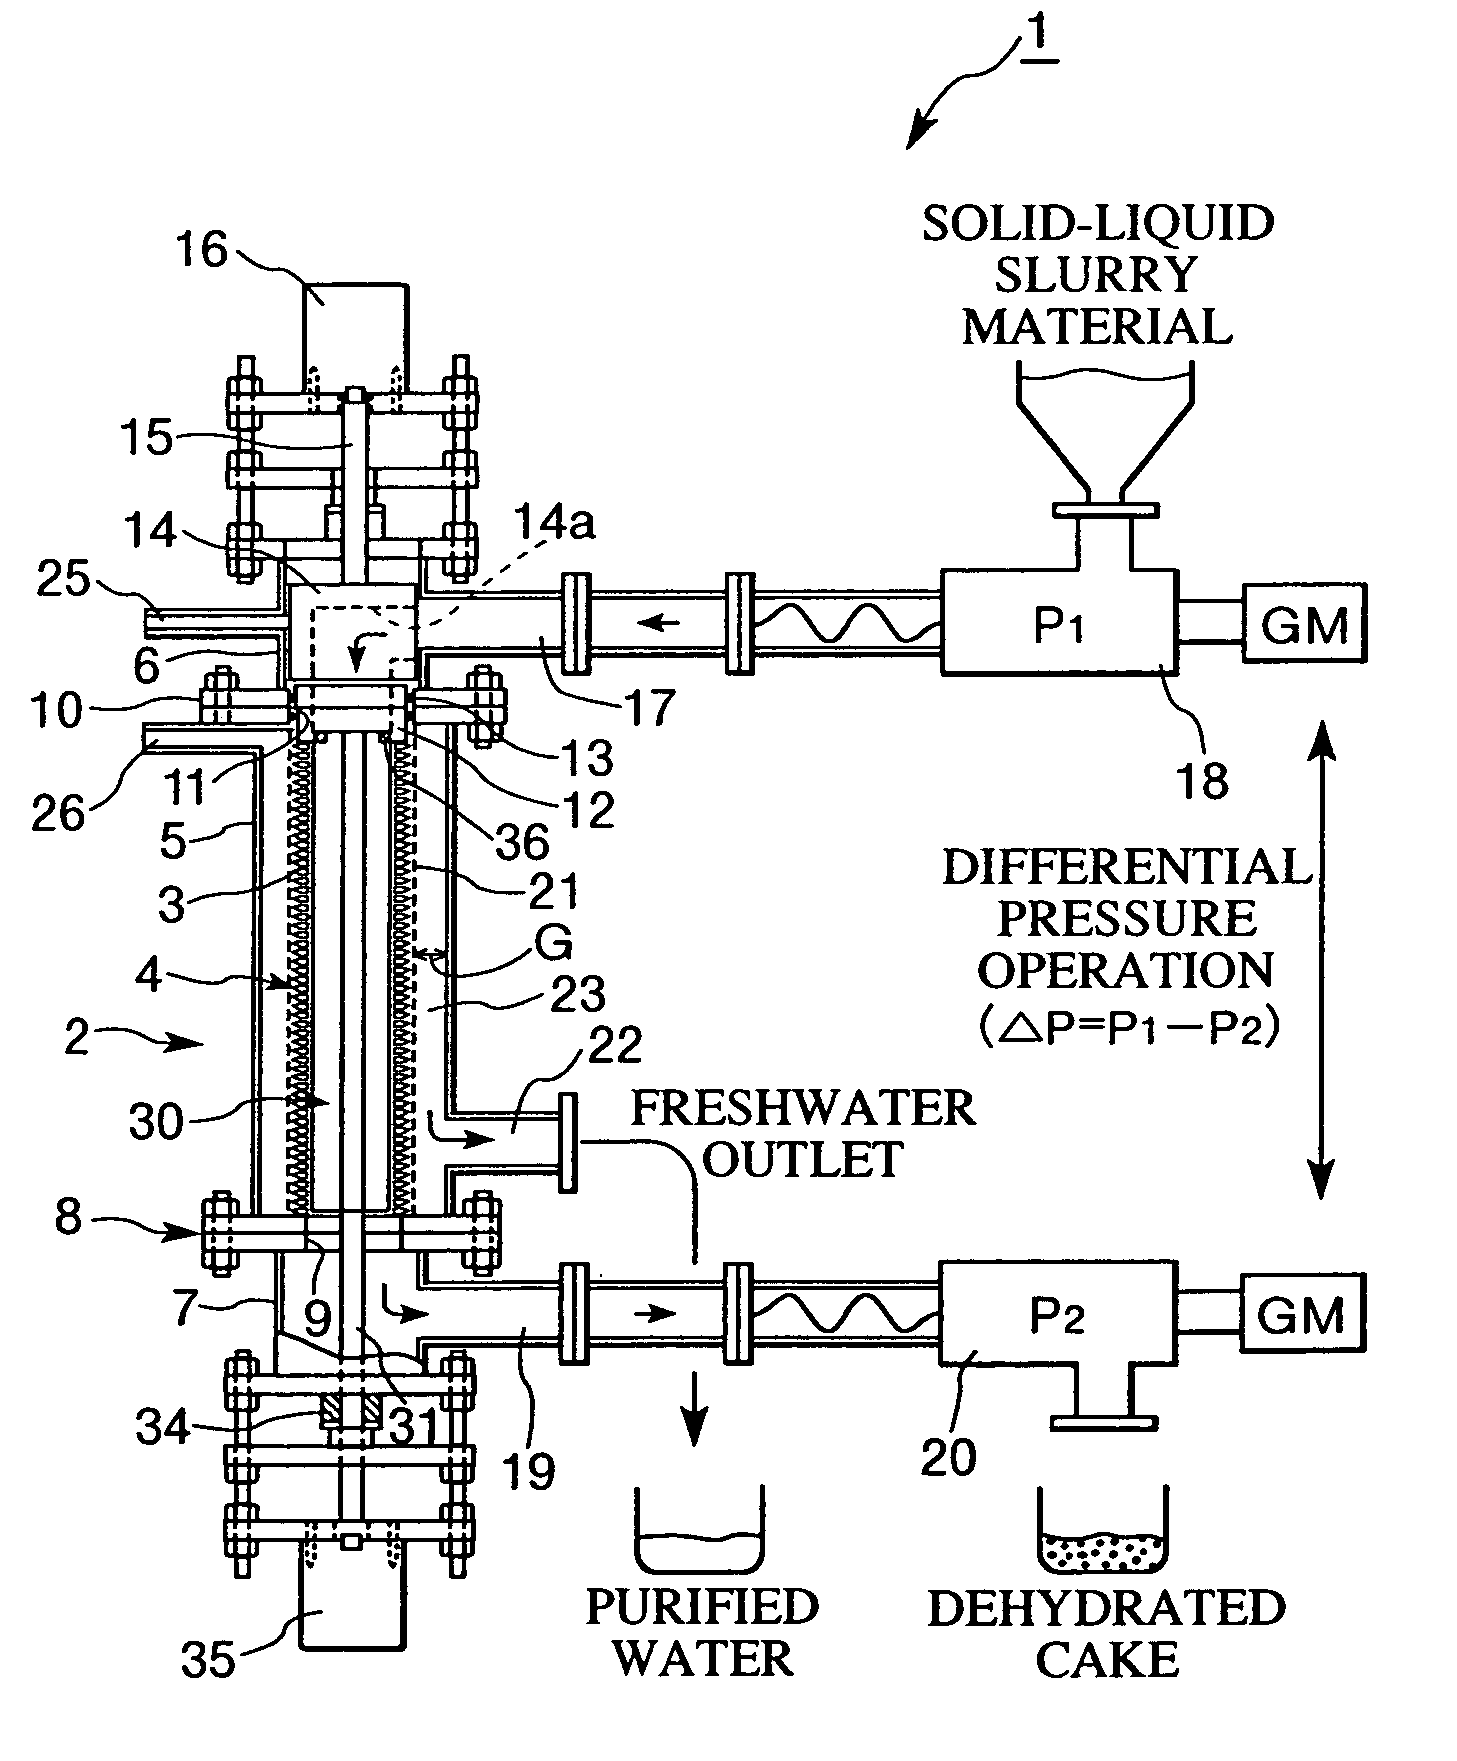 Fluid treating method and apparatus